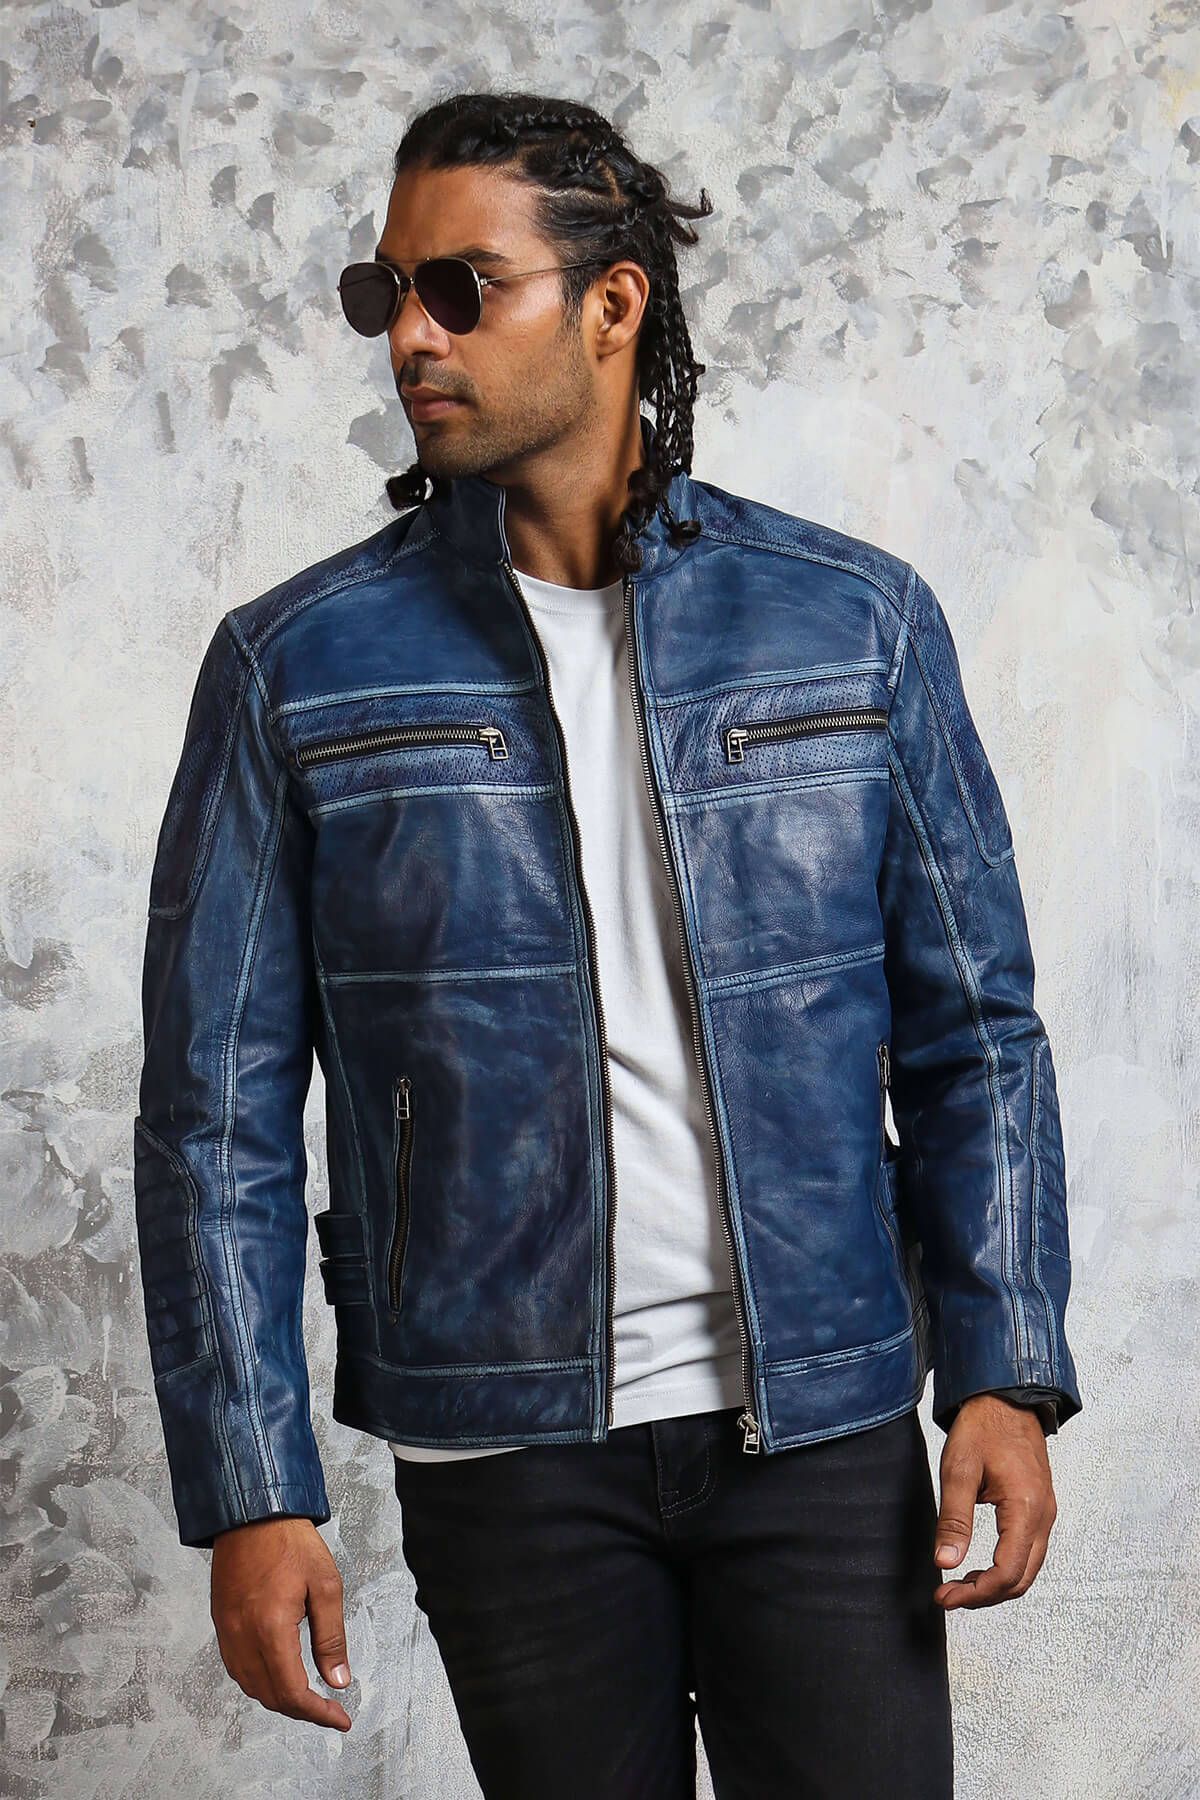 Preventie wond leer Men's Blue Leather Jacket - Perforated Distressed Blue Motorcycle Jacket